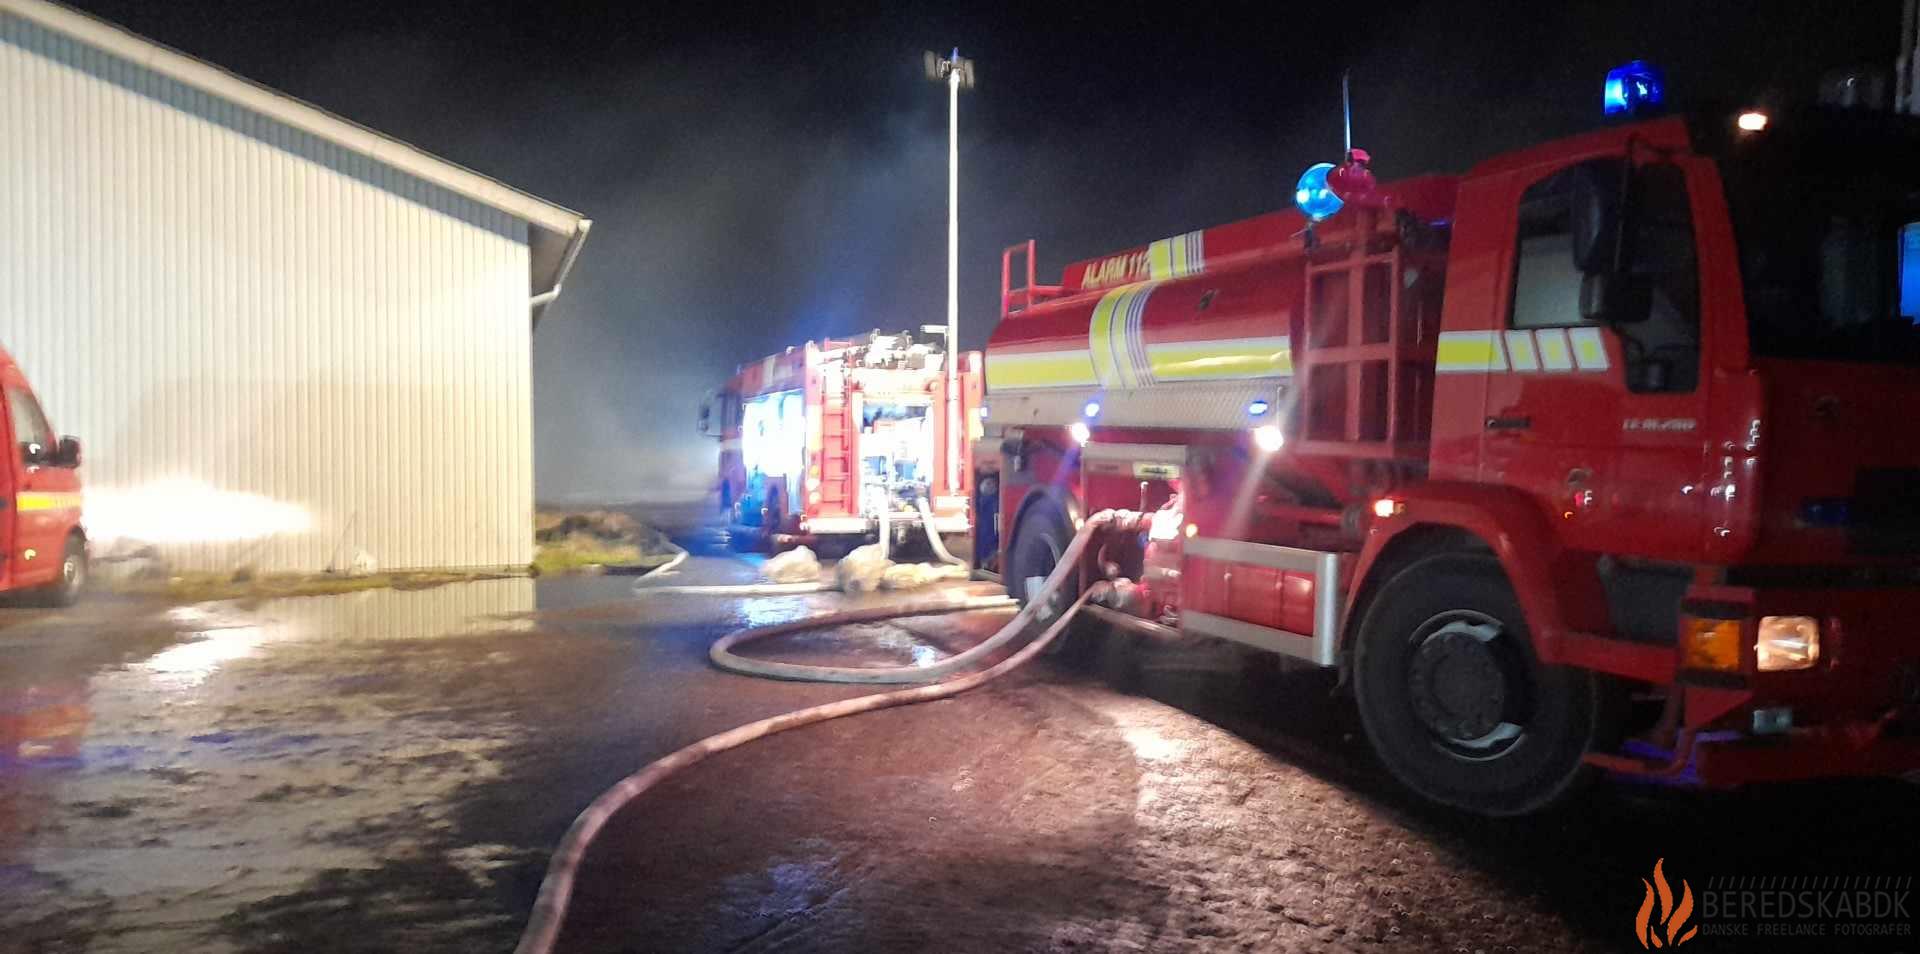 17-01-24 brand i en lade på Erslevvej i Hadsten